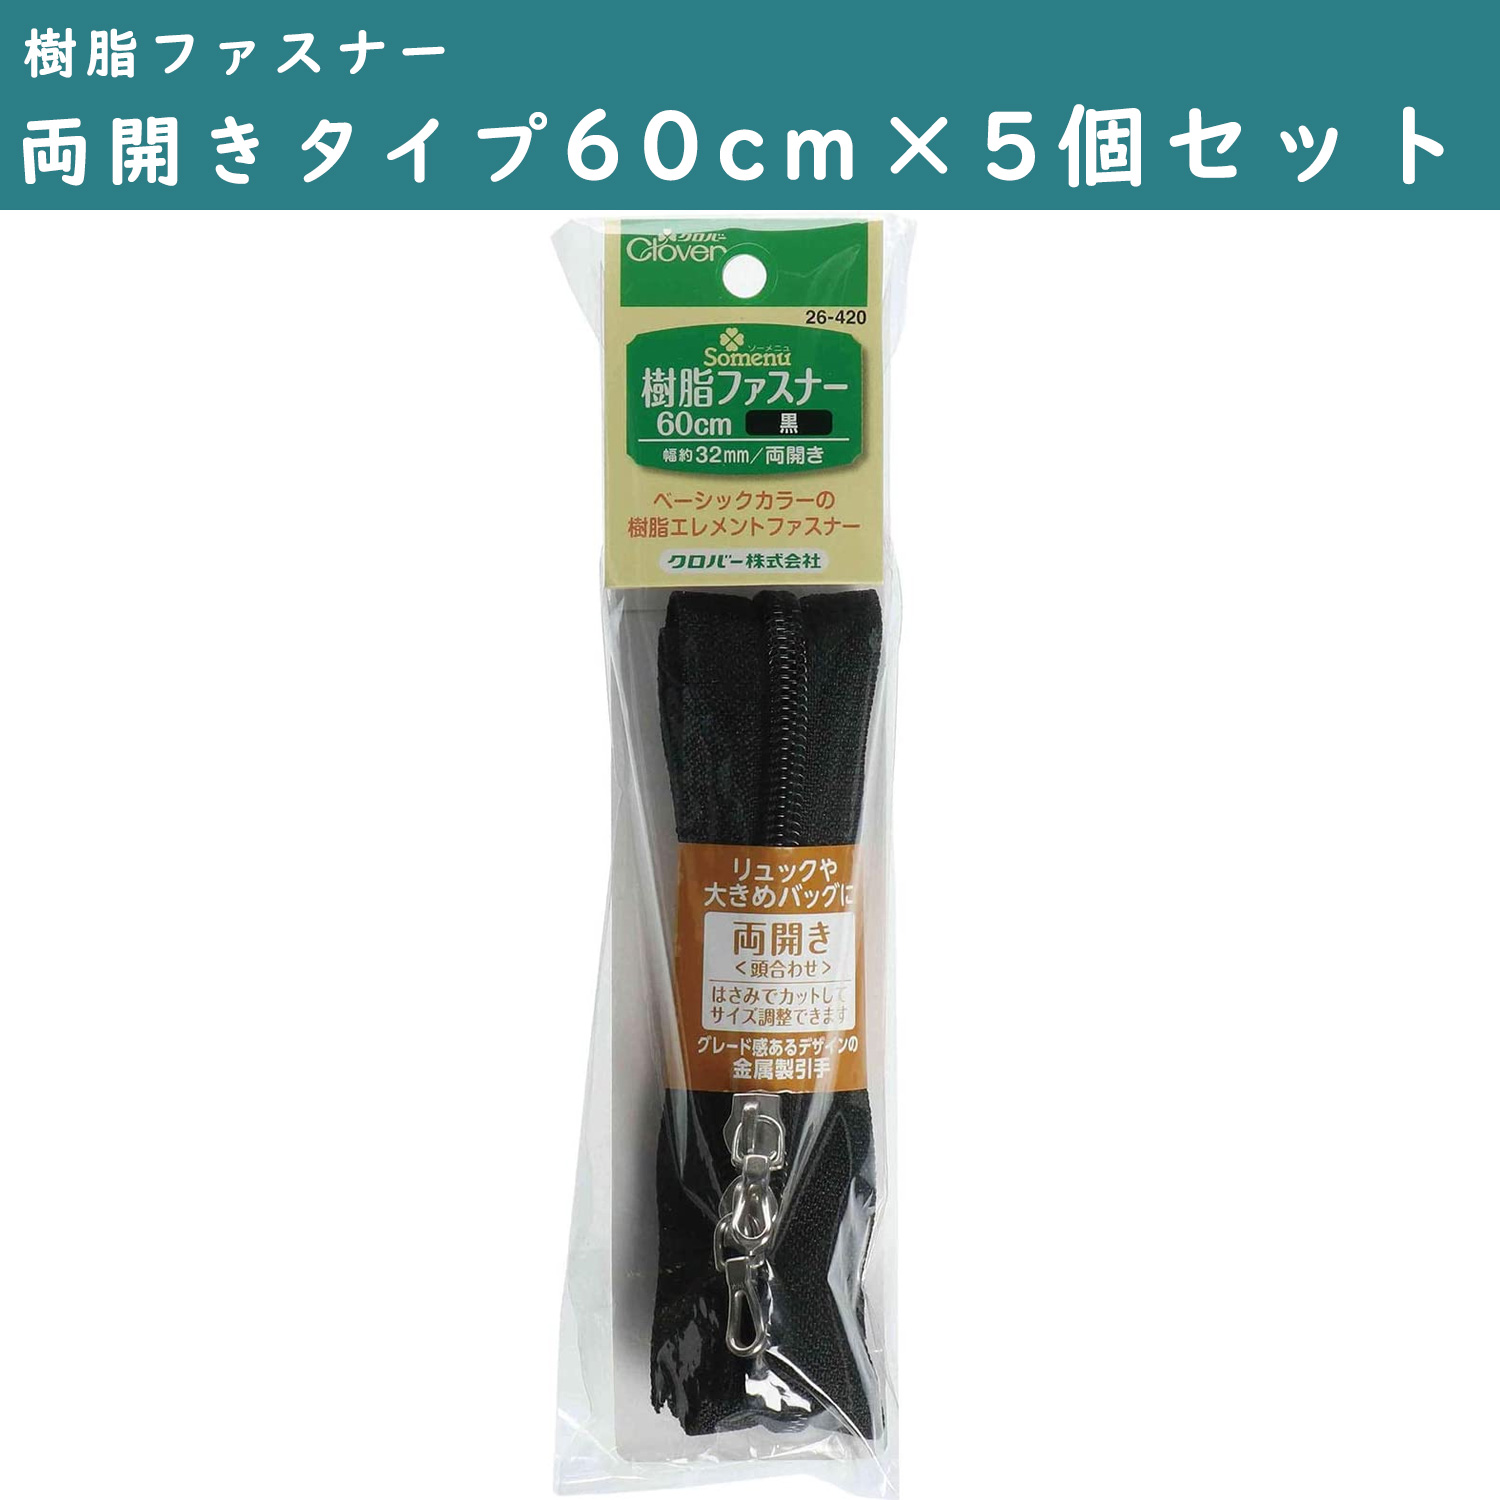 ■CL26-420-5set 樹脂ファスナー 60cm 両開きタイプ 黒 5個単位 (セット)